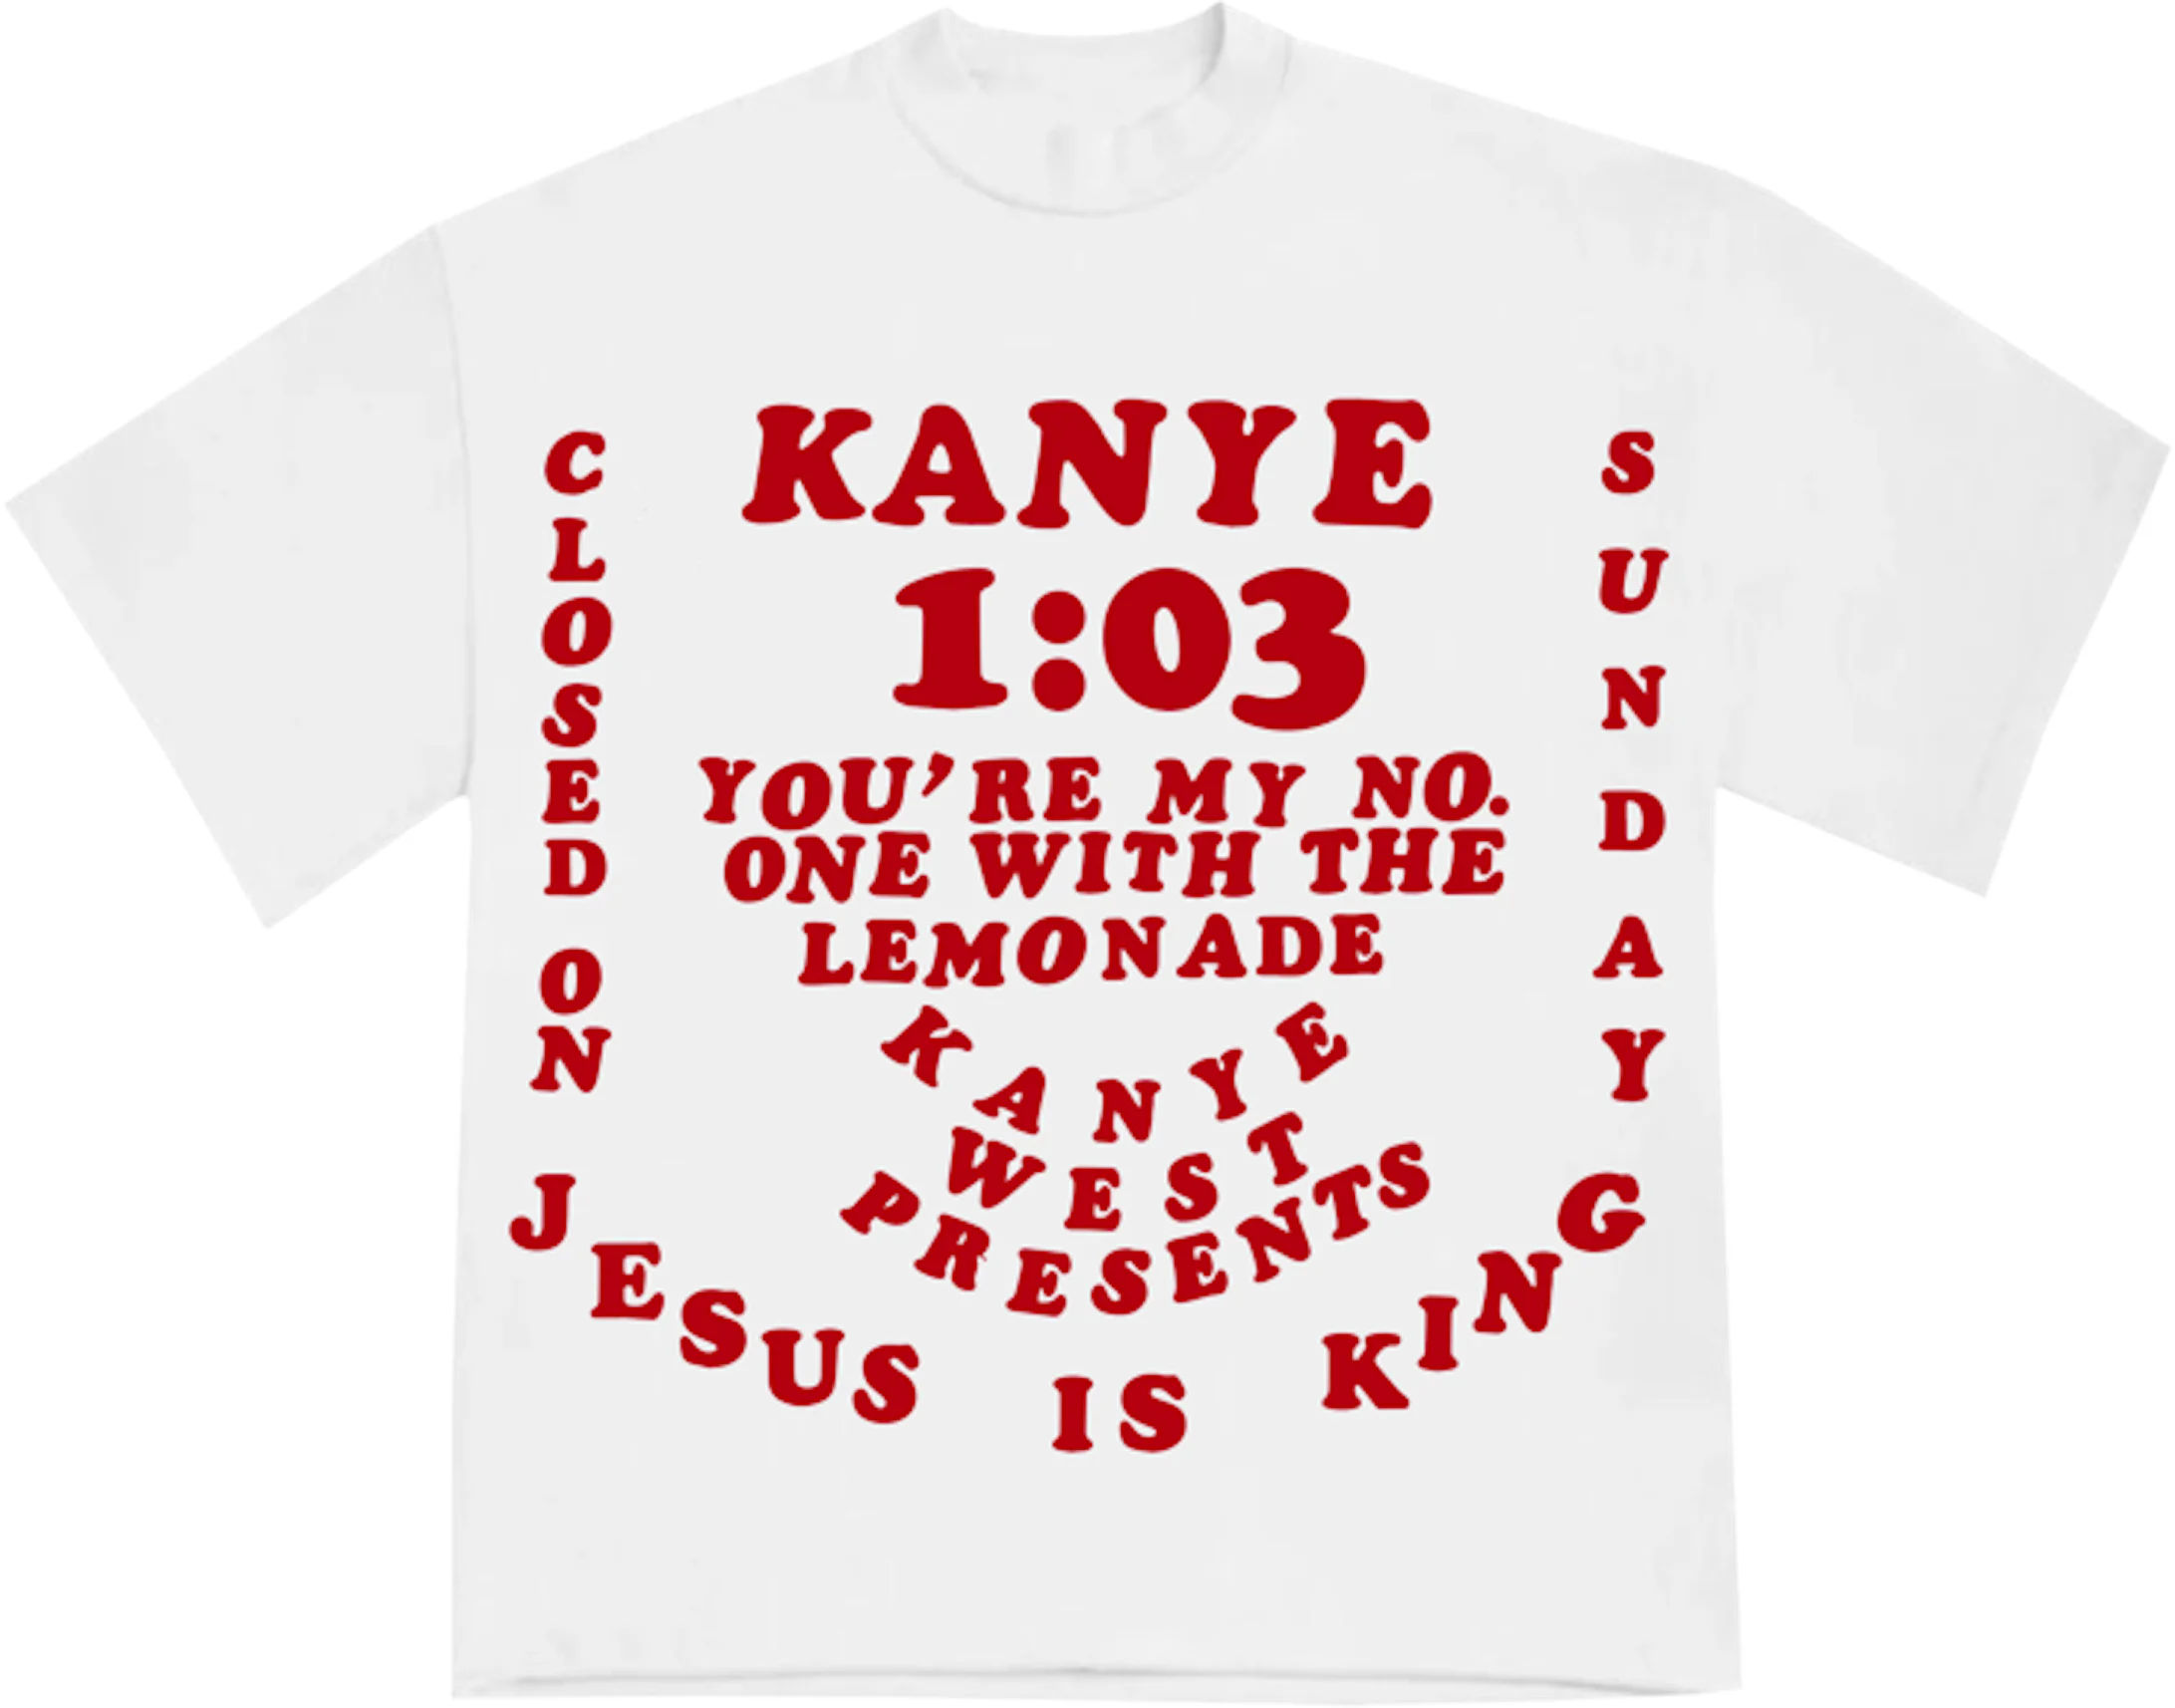 Kanye West CPFM for JIK III T-Shirt White Men's - FW19 - US